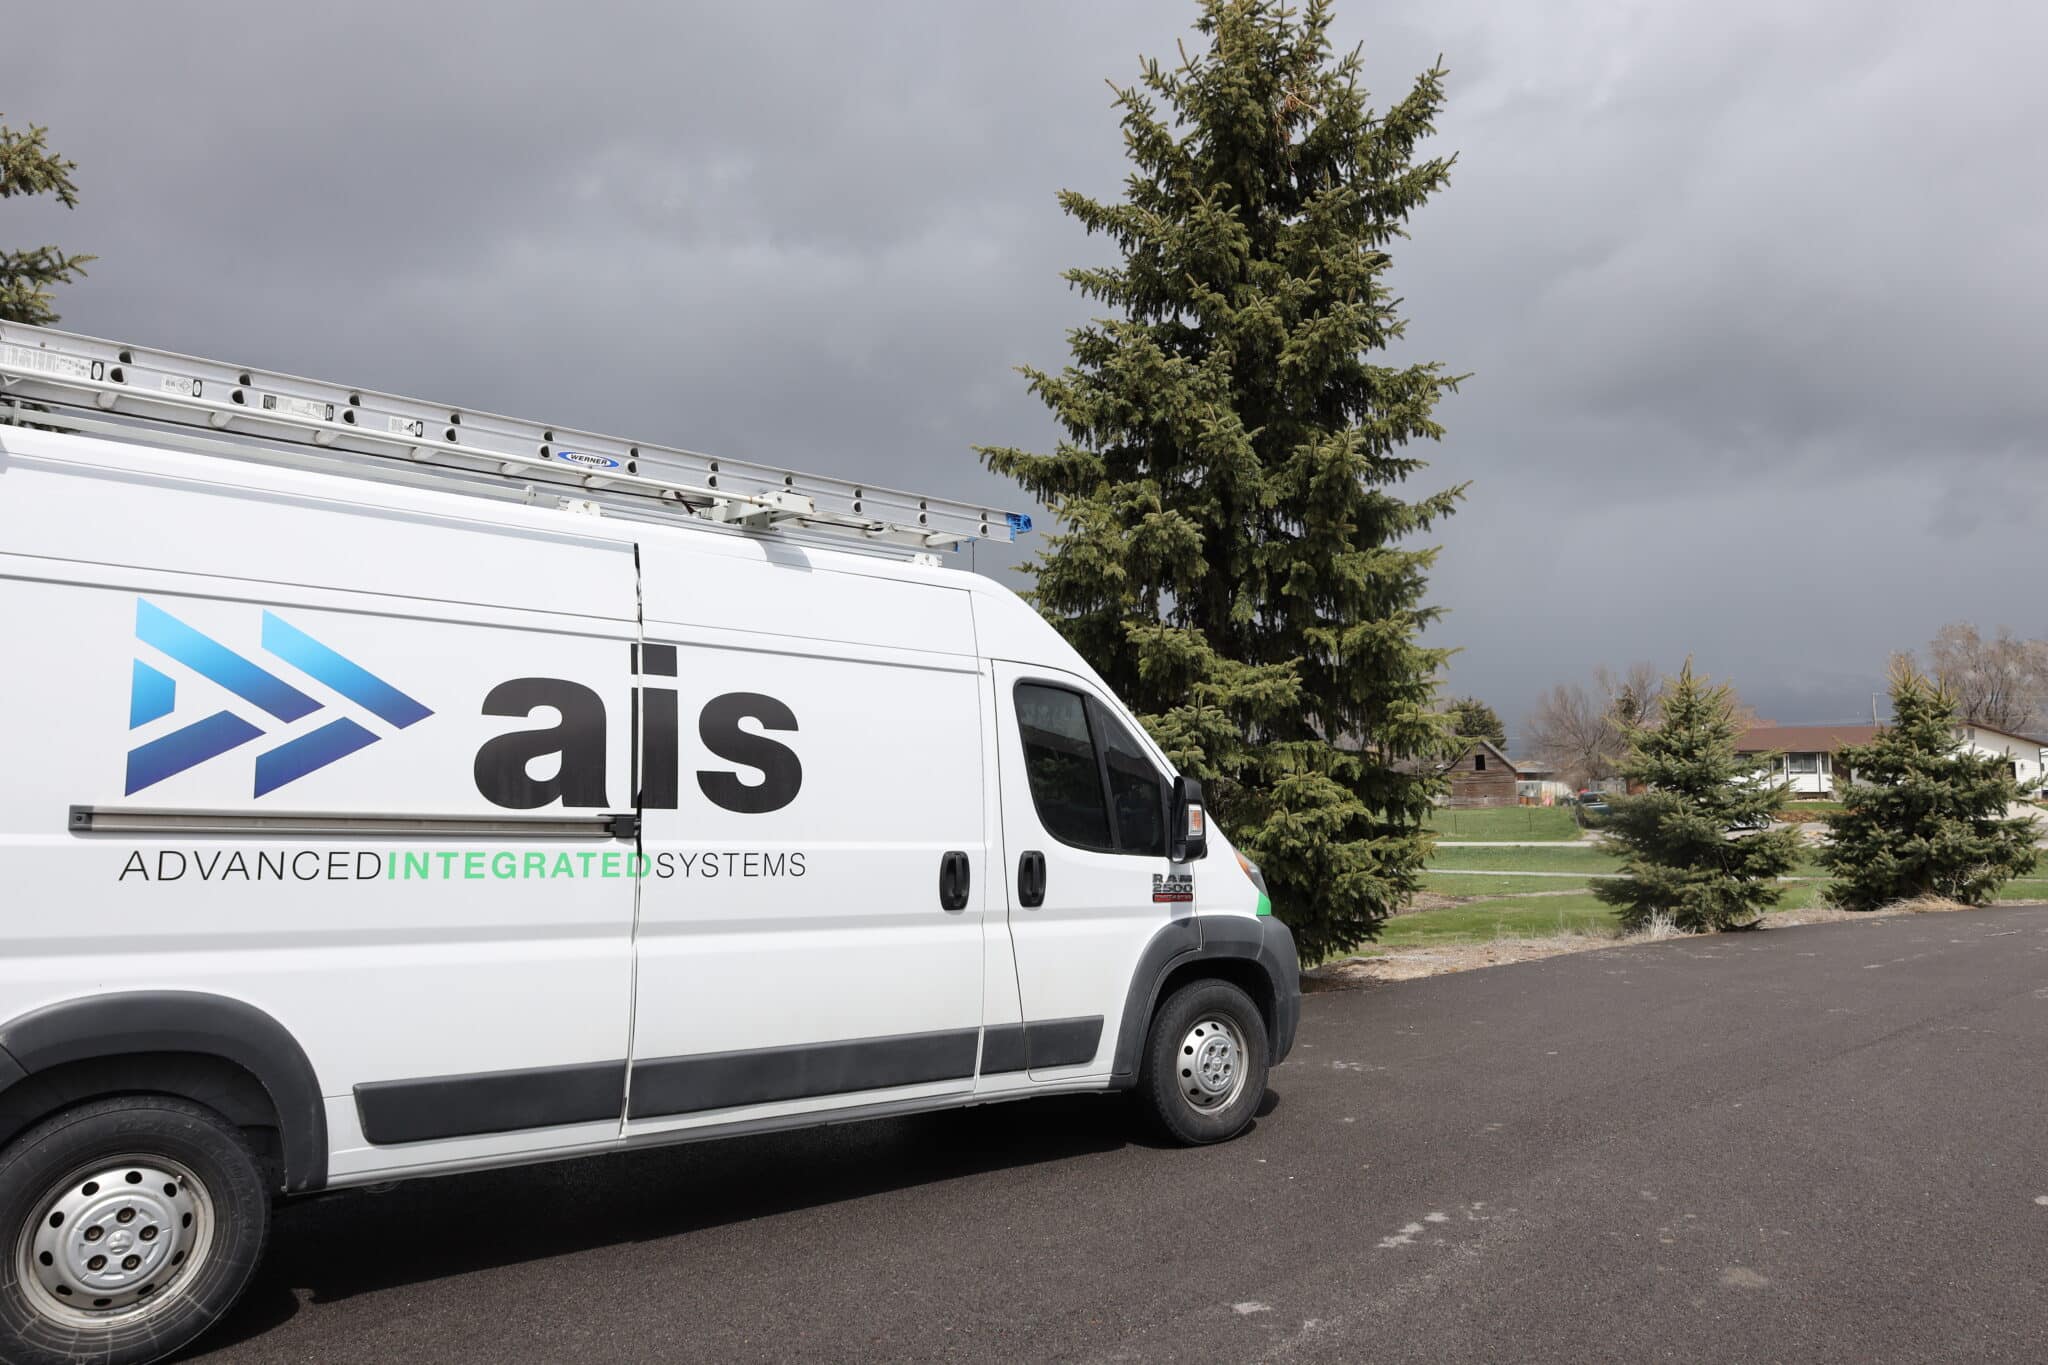 AIS service van